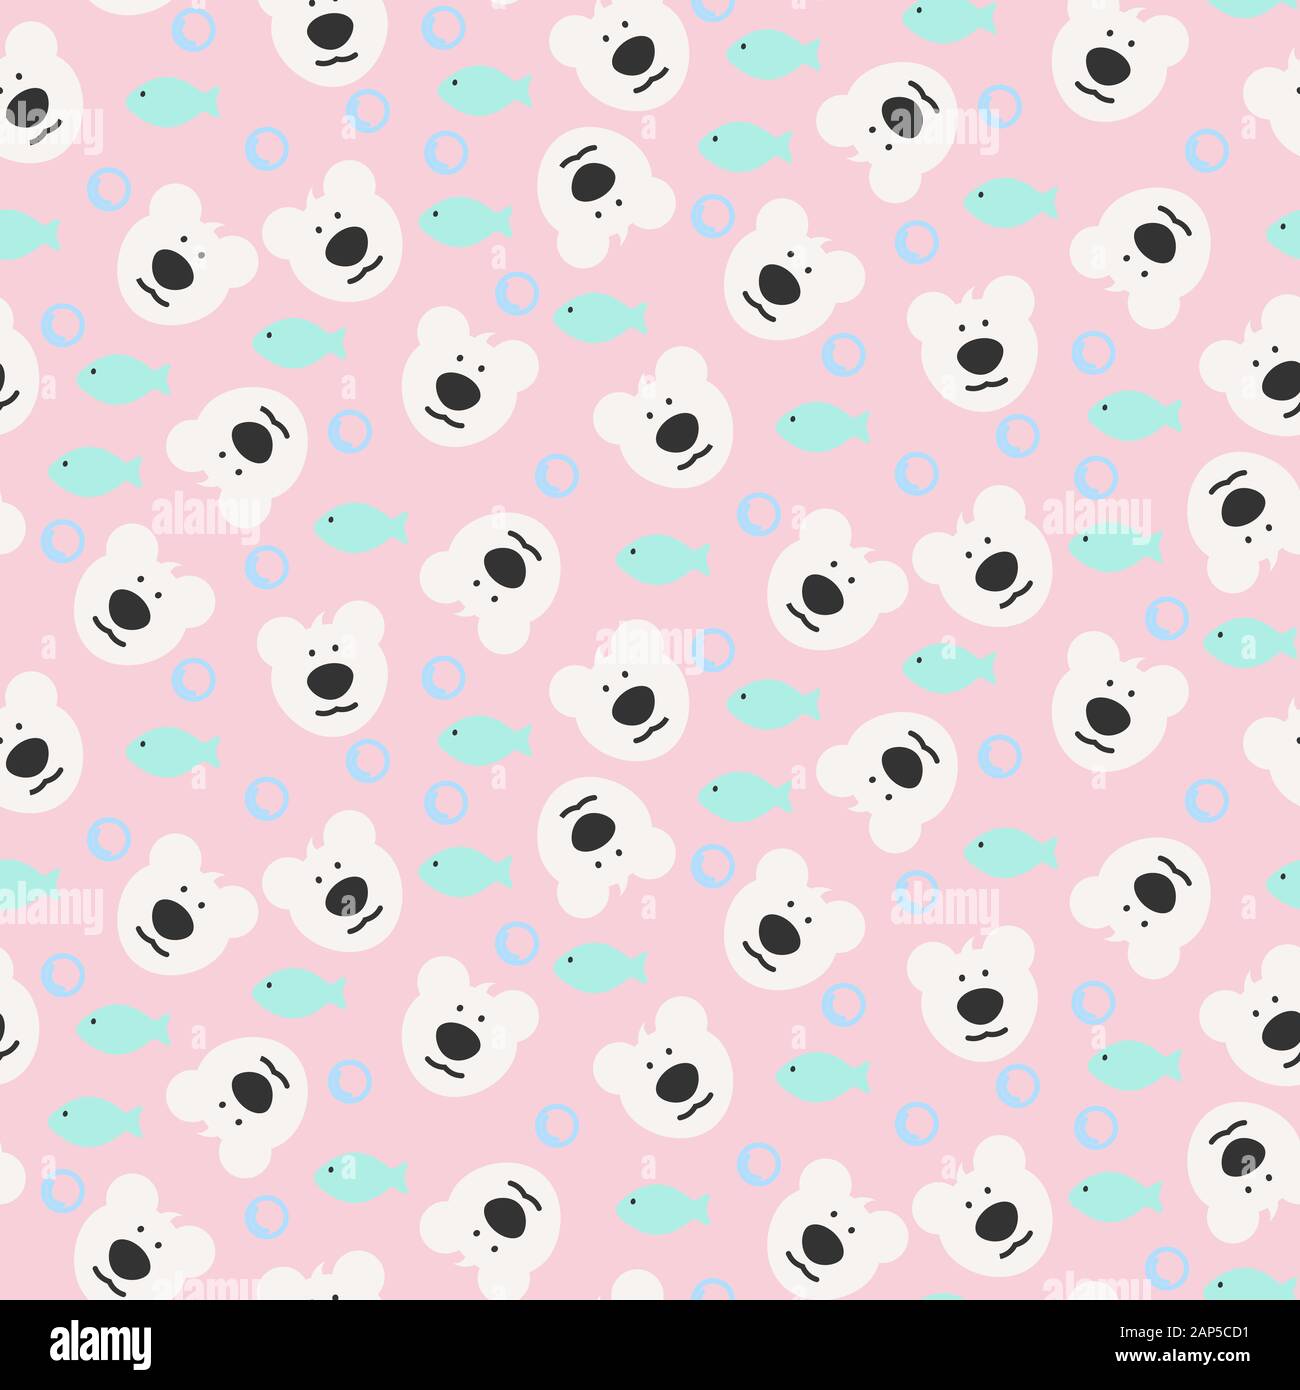 Seamless polar bear face and fish pattern. Cute cartoon repeat background vector illustration. Stock Vector